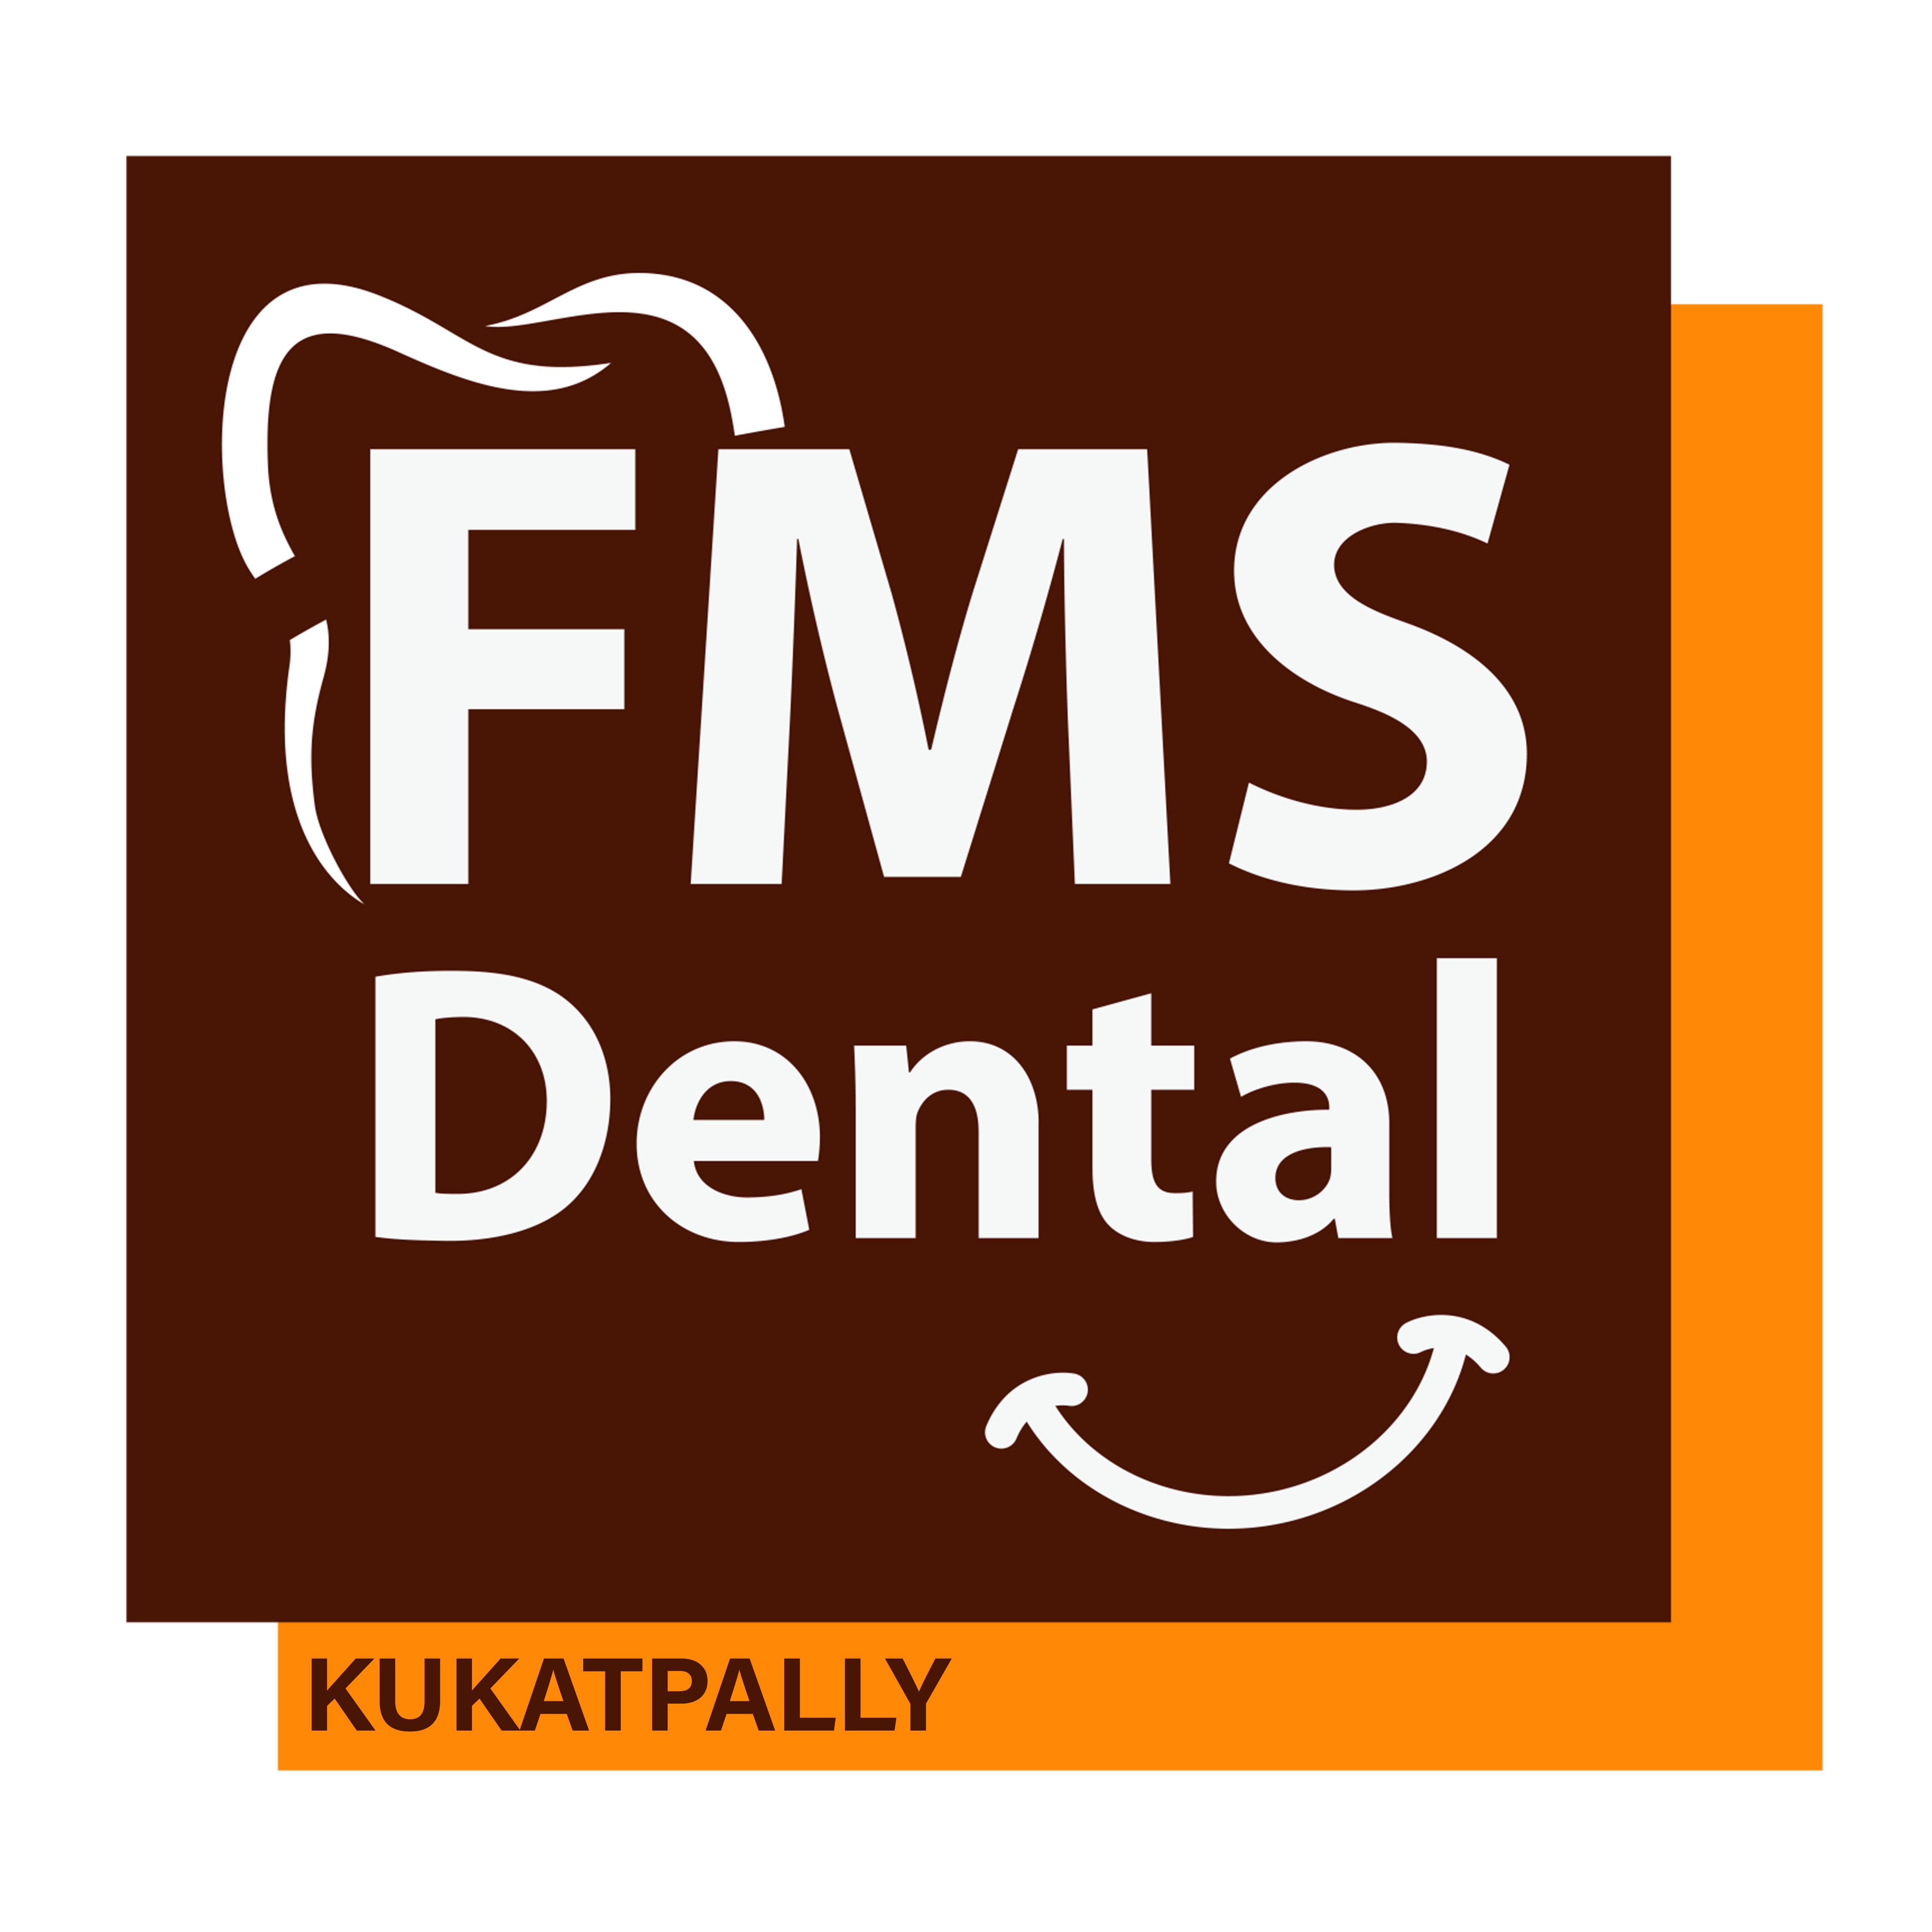 FMS DENTAL Madinaguda|Hospitals|Medical Services